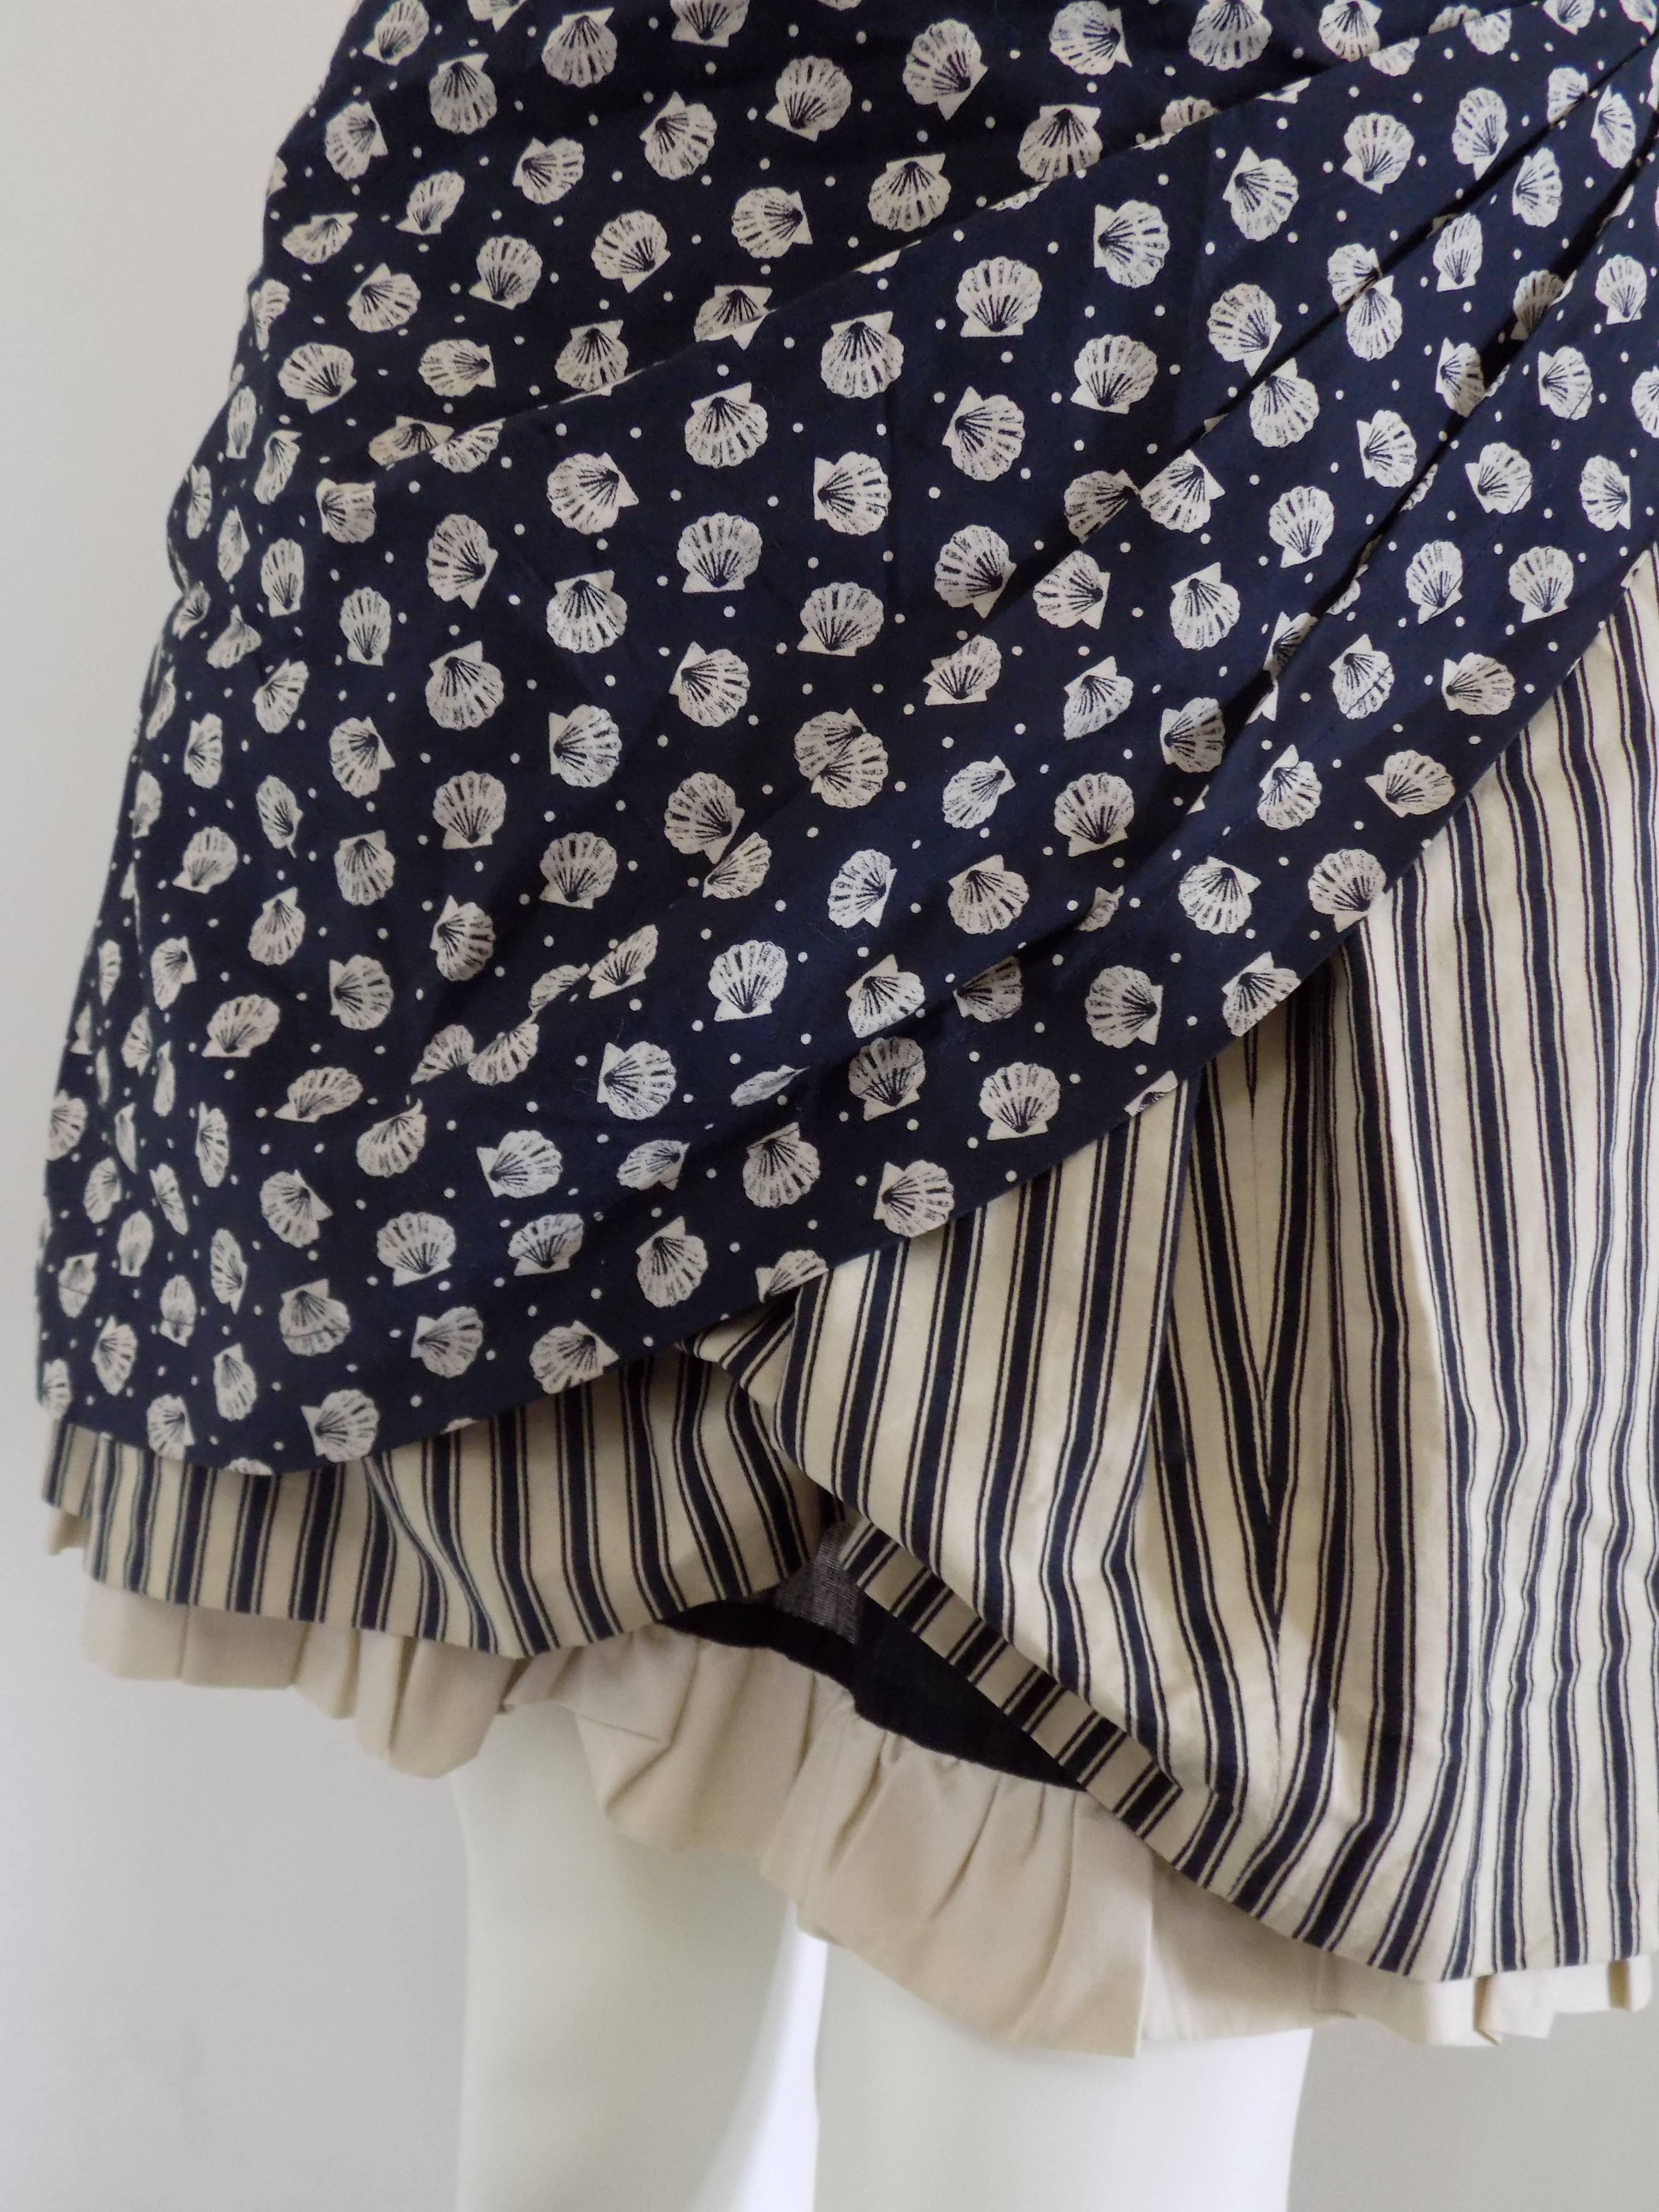 Cotton blu/beije Byblos Skirt
Totally made in italy in italian size range 44